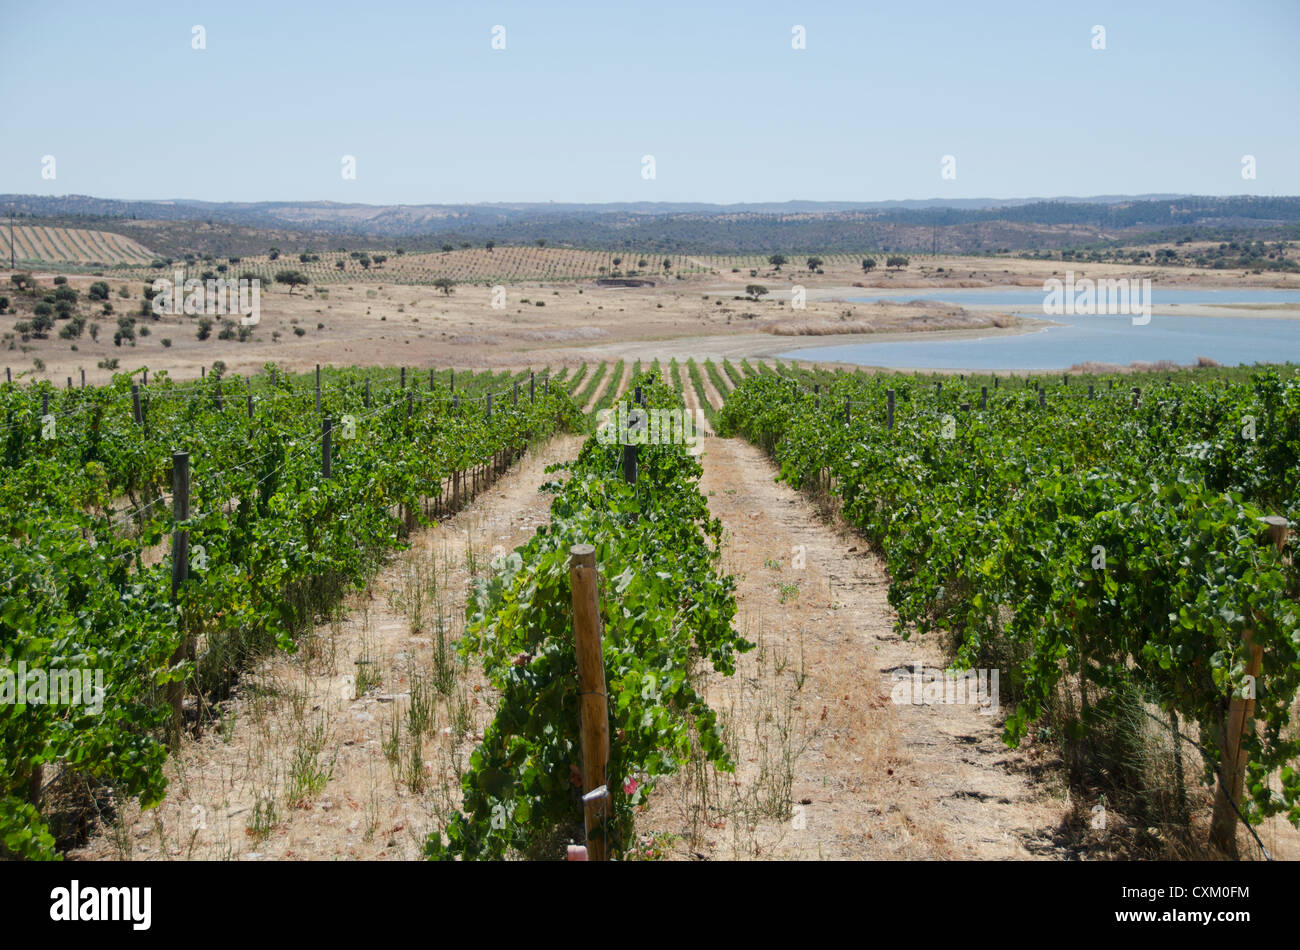 Vigneto di uva, Alentejo, Portogallo, Europa terroir, vinho, uva Foto Stock